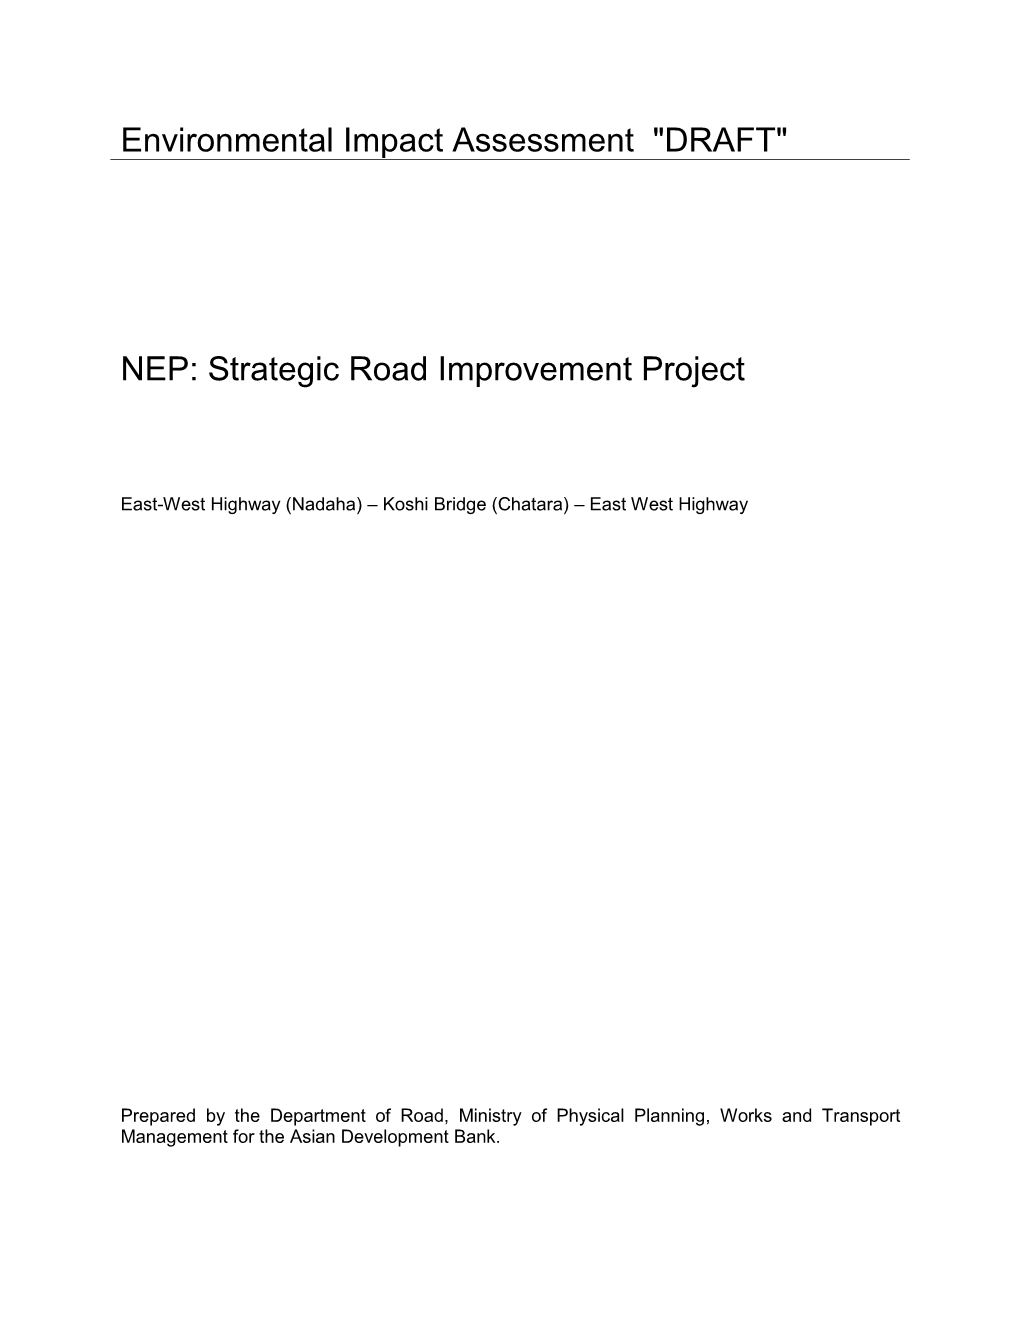 Strategic Road Improvement Project: East-West Highway (Nadaha)